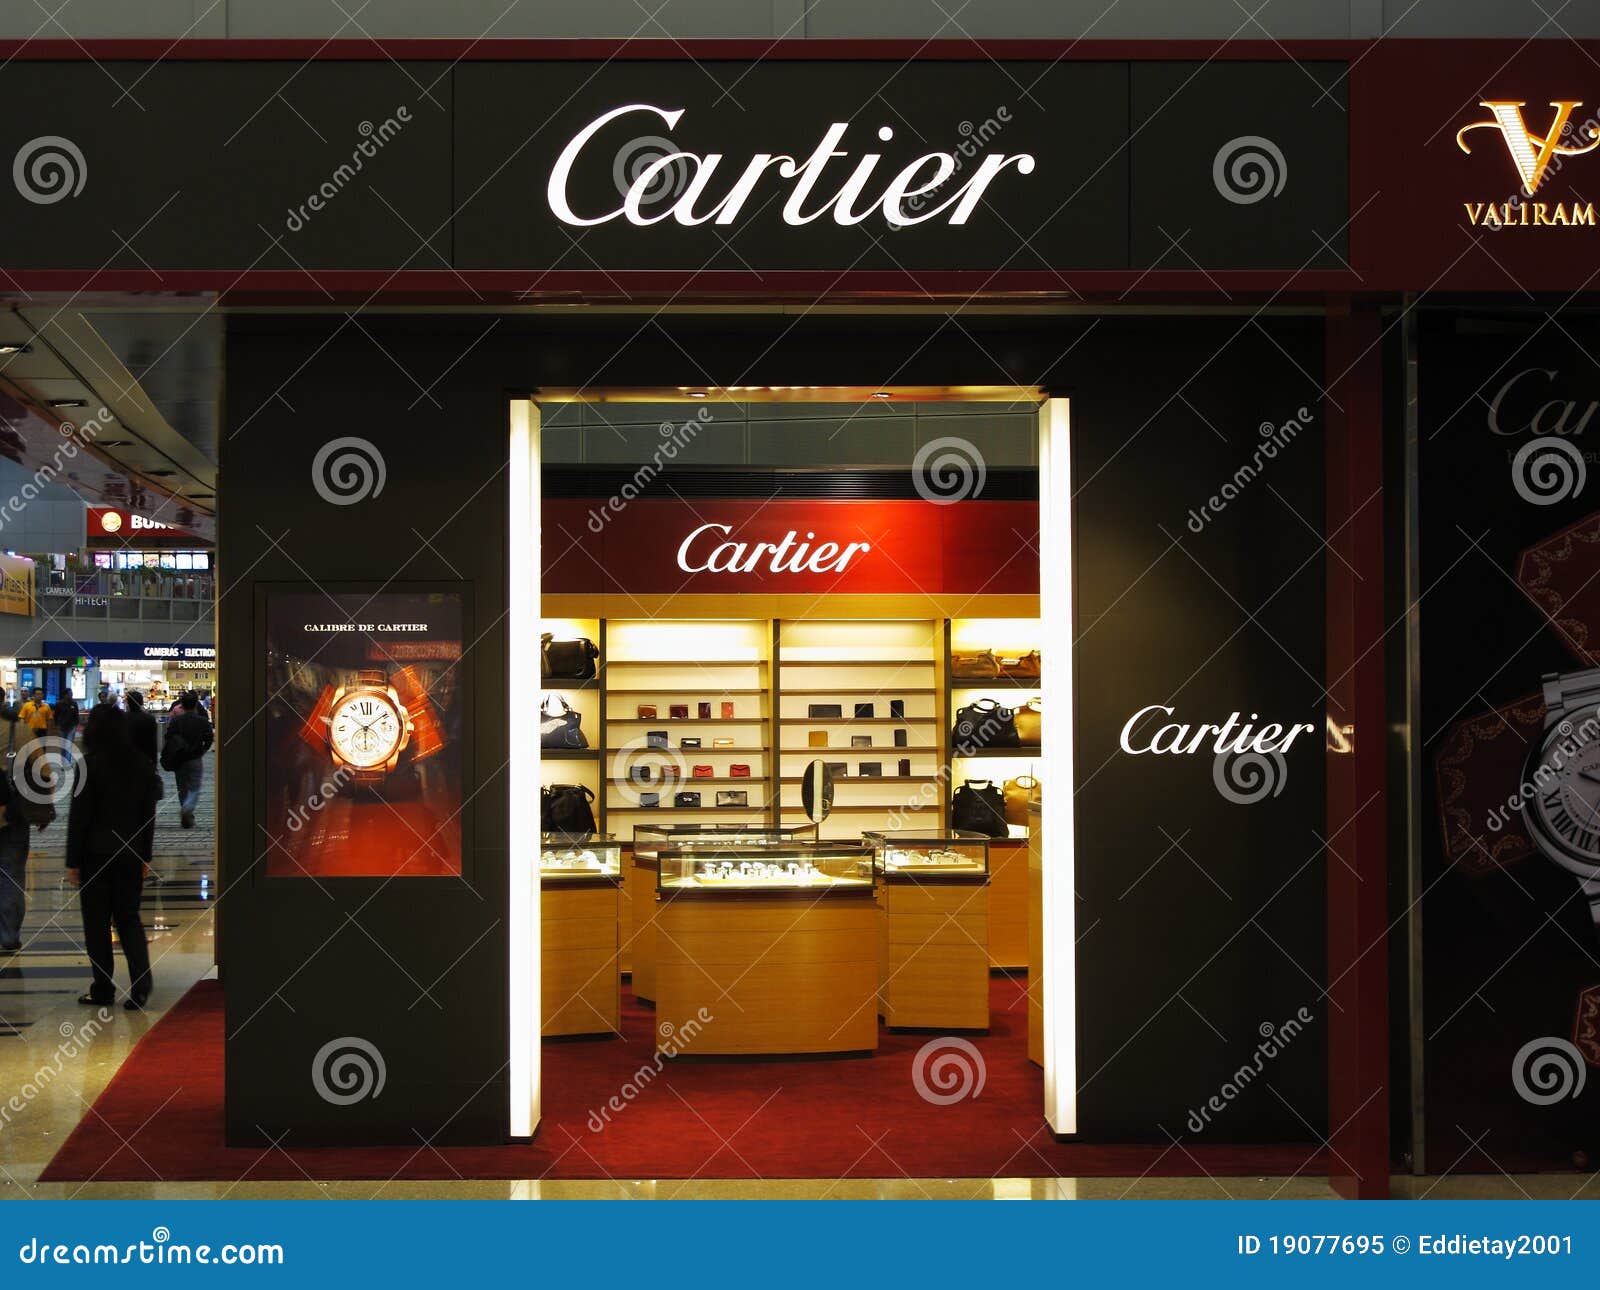 Cartier luxury brand editorial image 